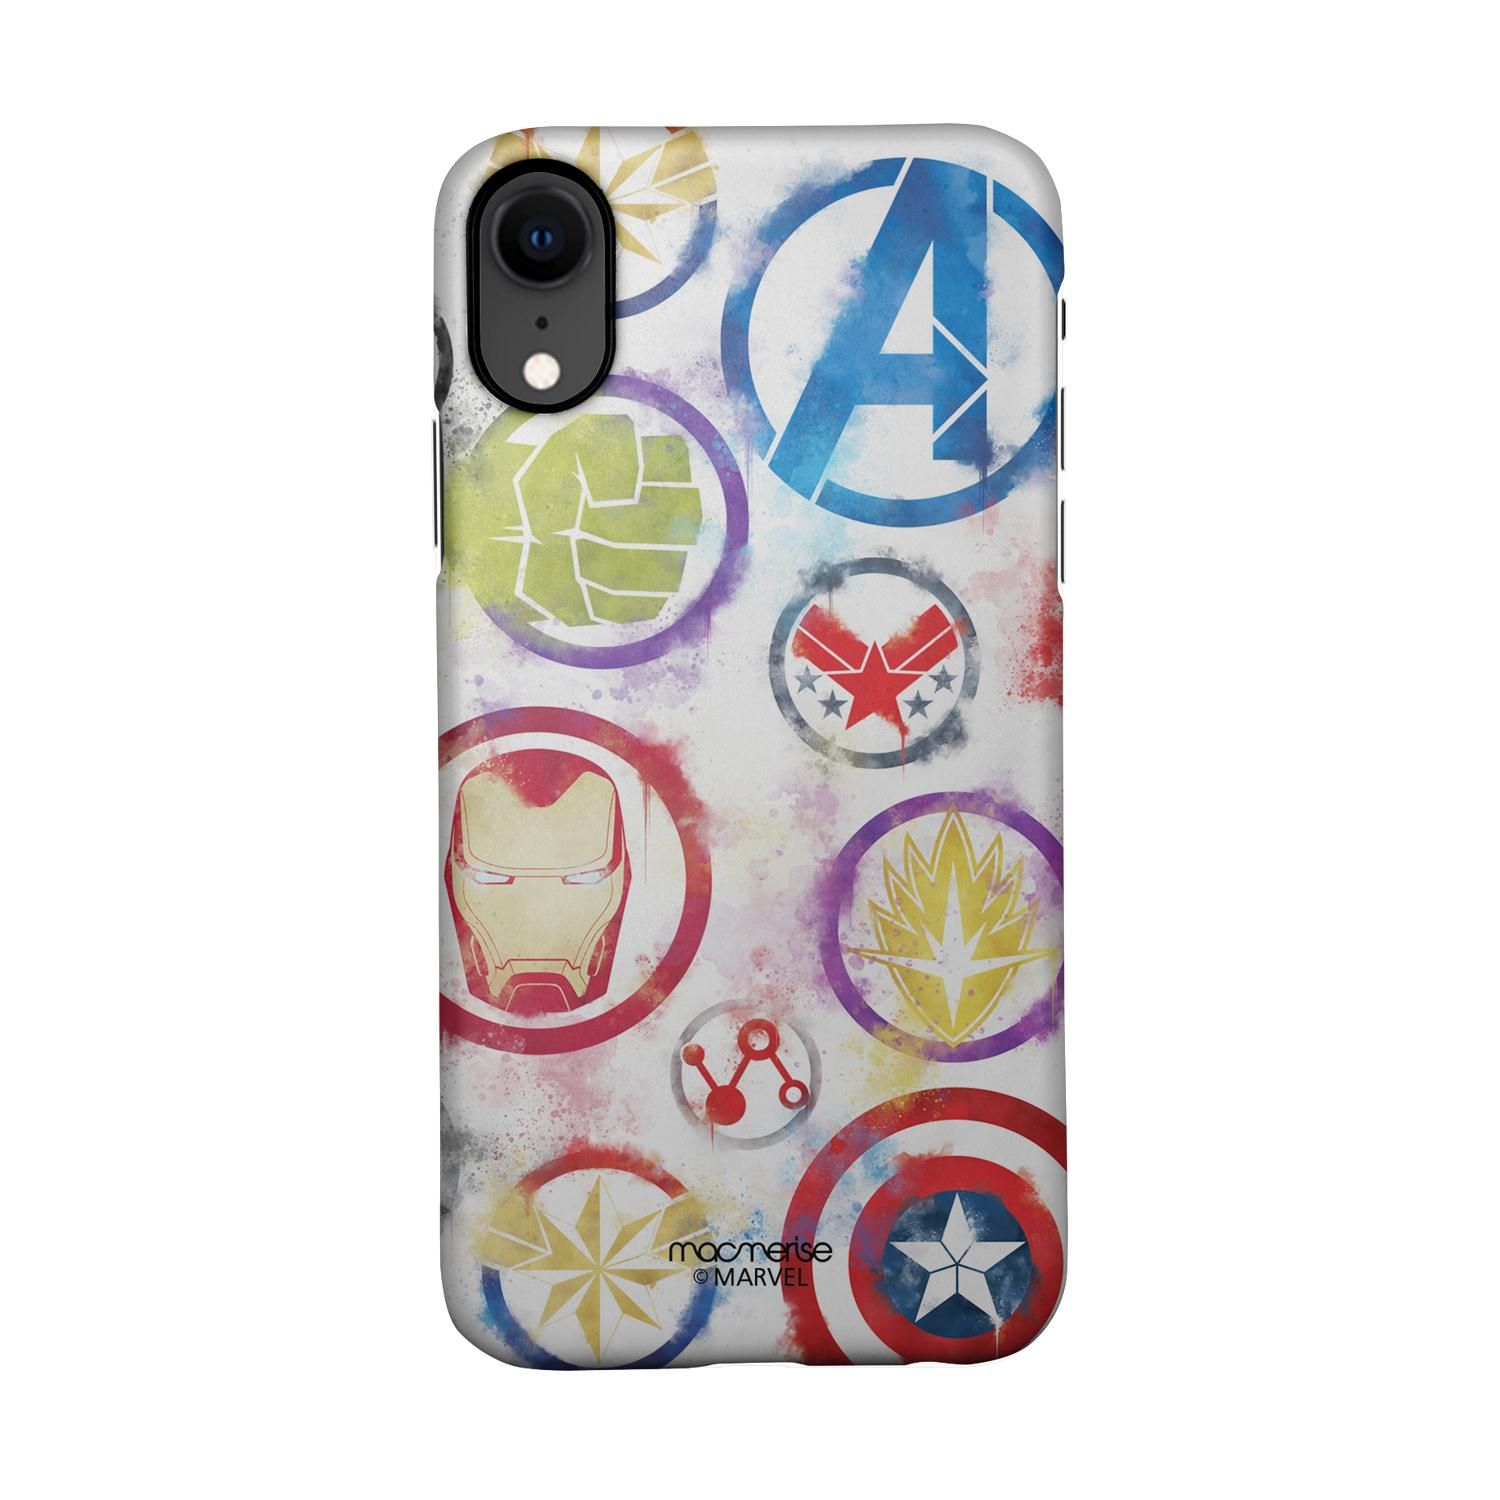 Buy Avengers Icons Graffiti - Sleek Phone Case for iPhone XR Online